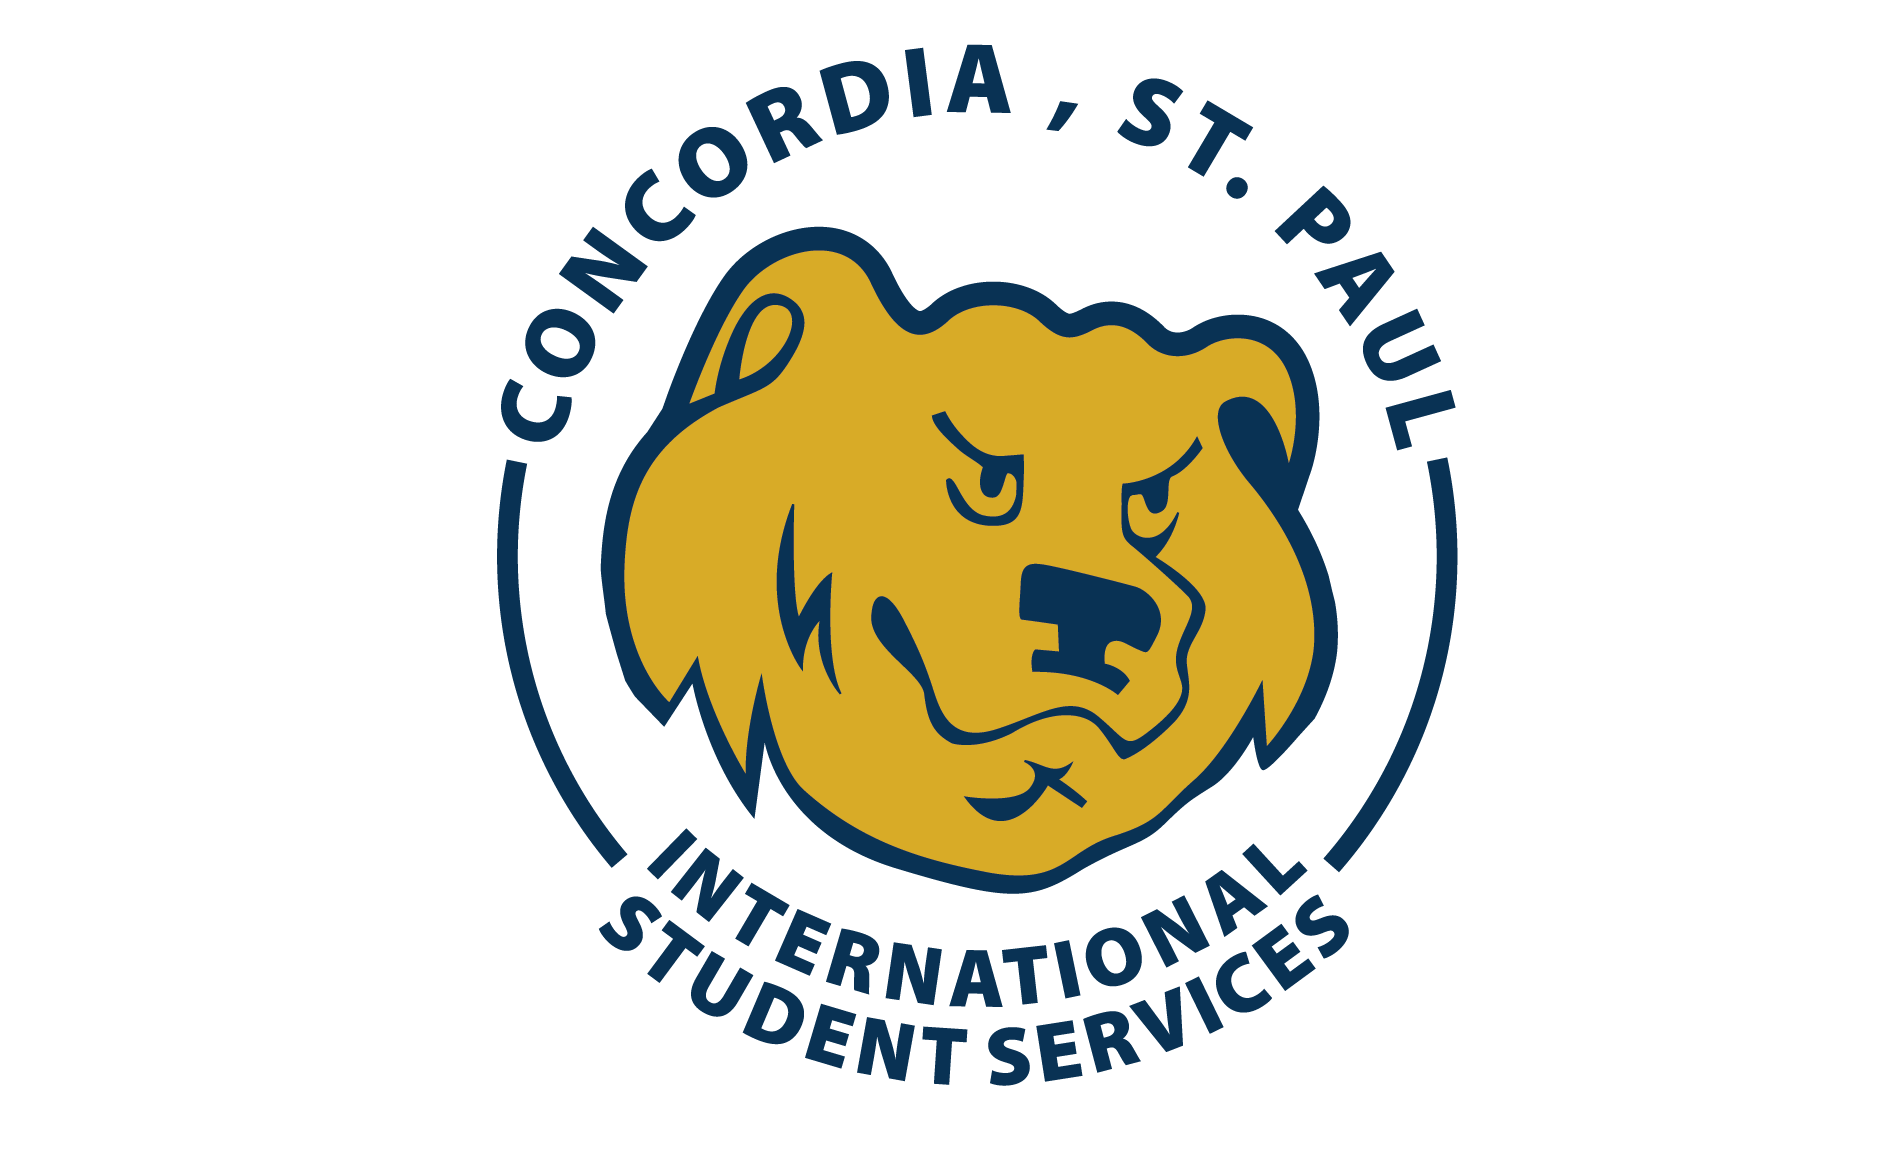 CSP International Student Services